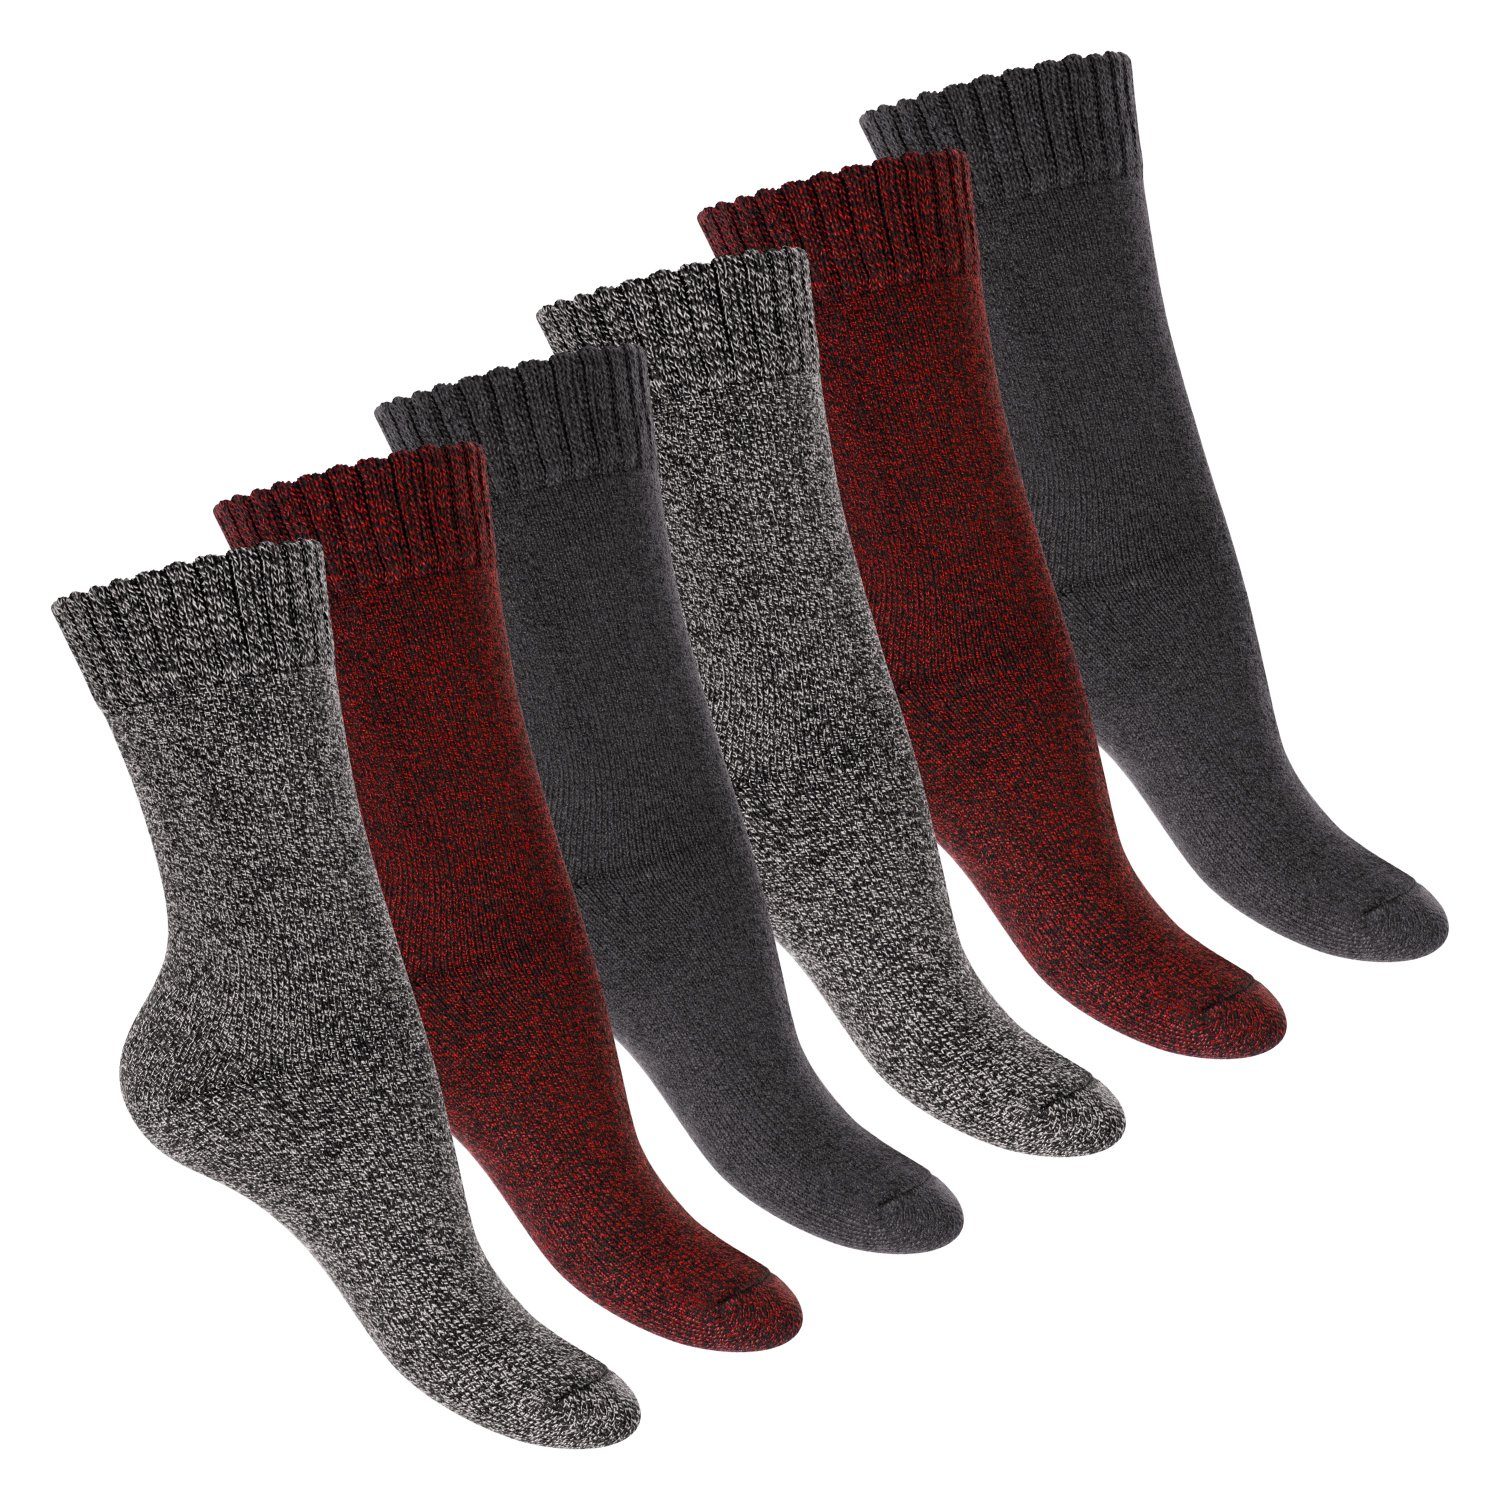 Bezahlbarer Preis Footstar Thermosocken Damen Frottee Winter Grau/Rot Paar) Effekt mit Socken Socken Thermo (6